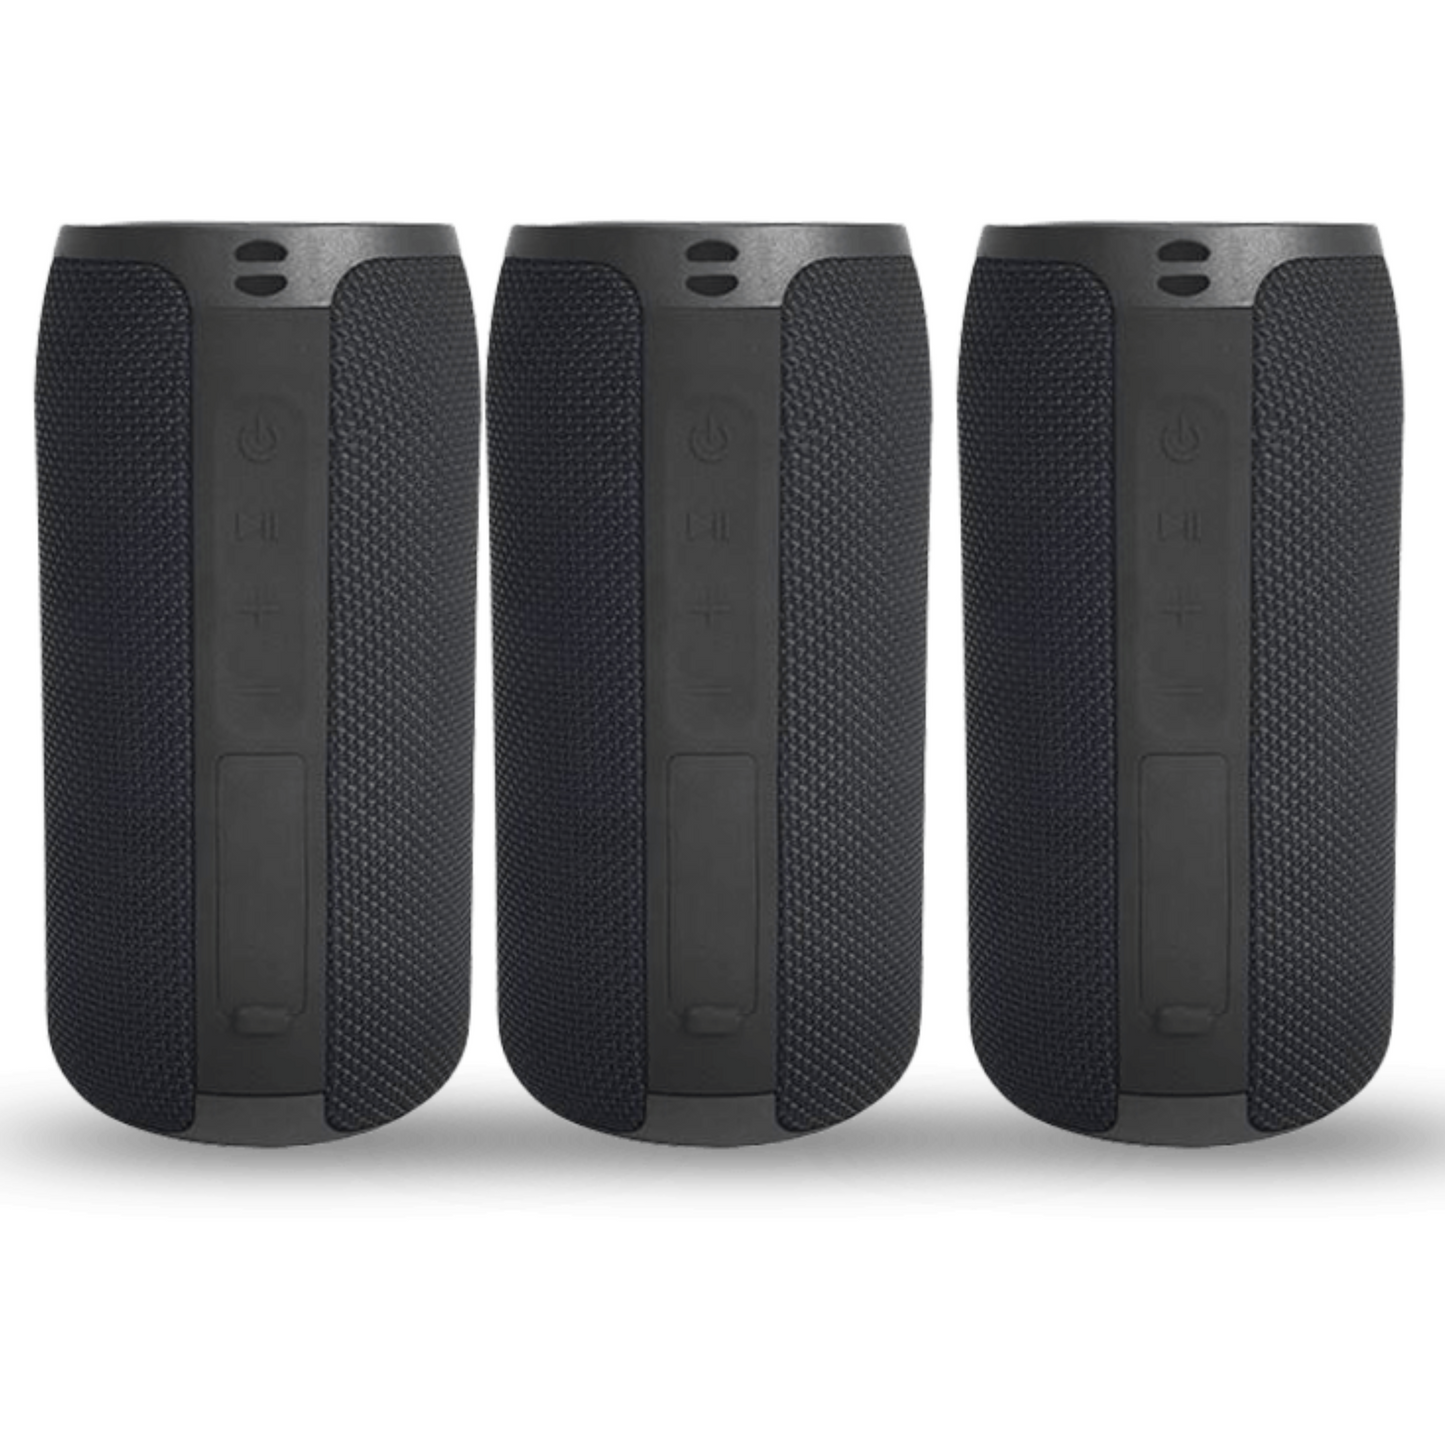 Bluetooth Speaker - Gadgetos.co